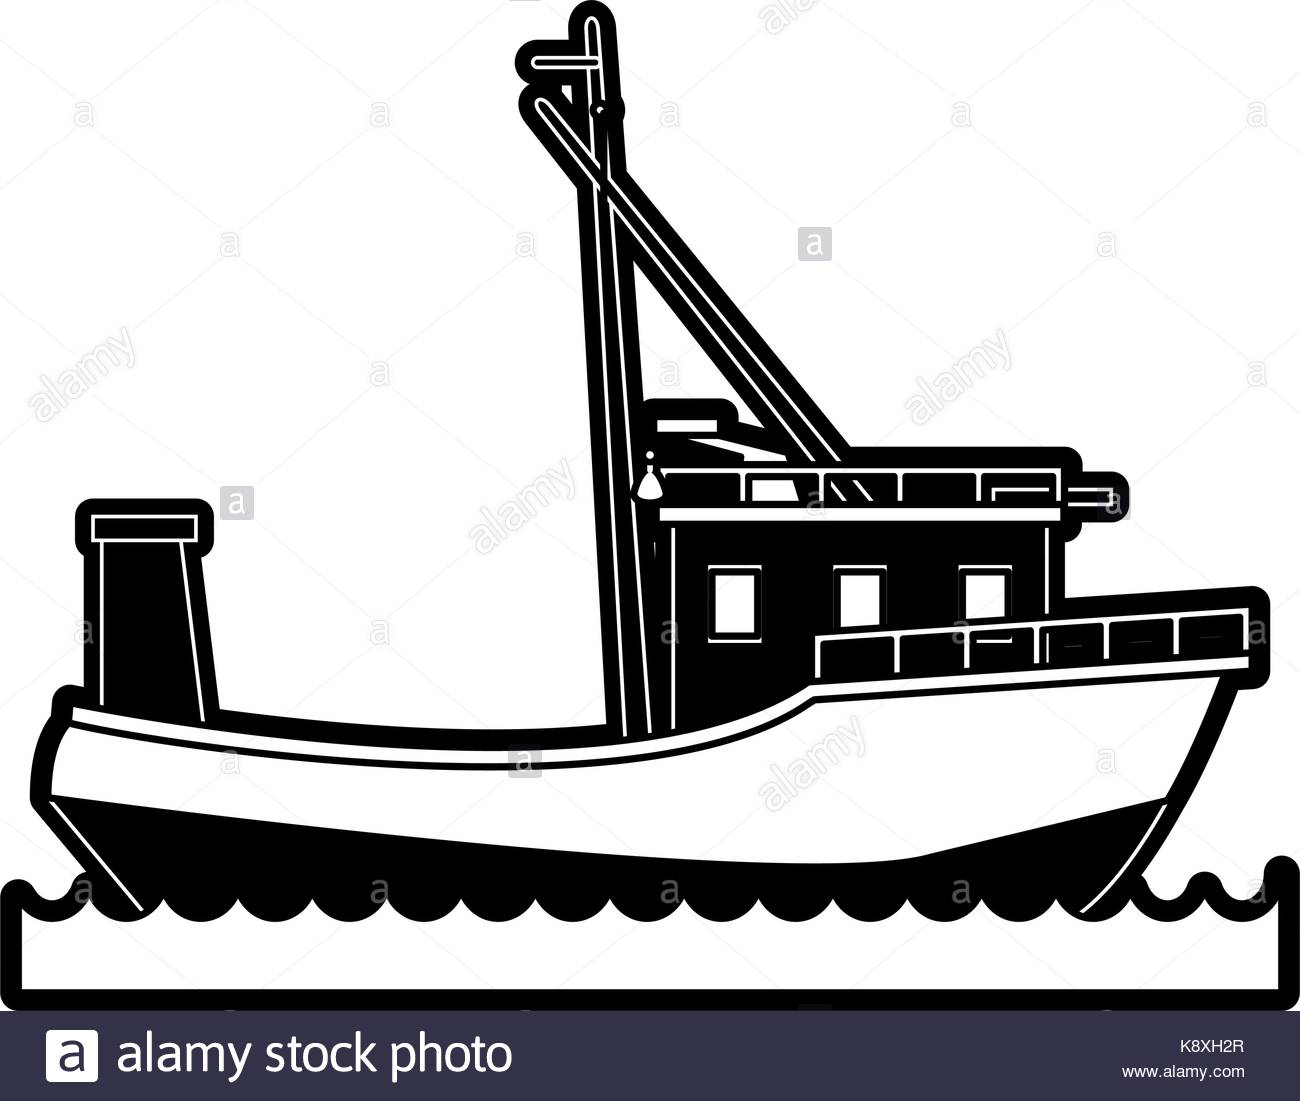 Fishing-boat icons | Noun Project